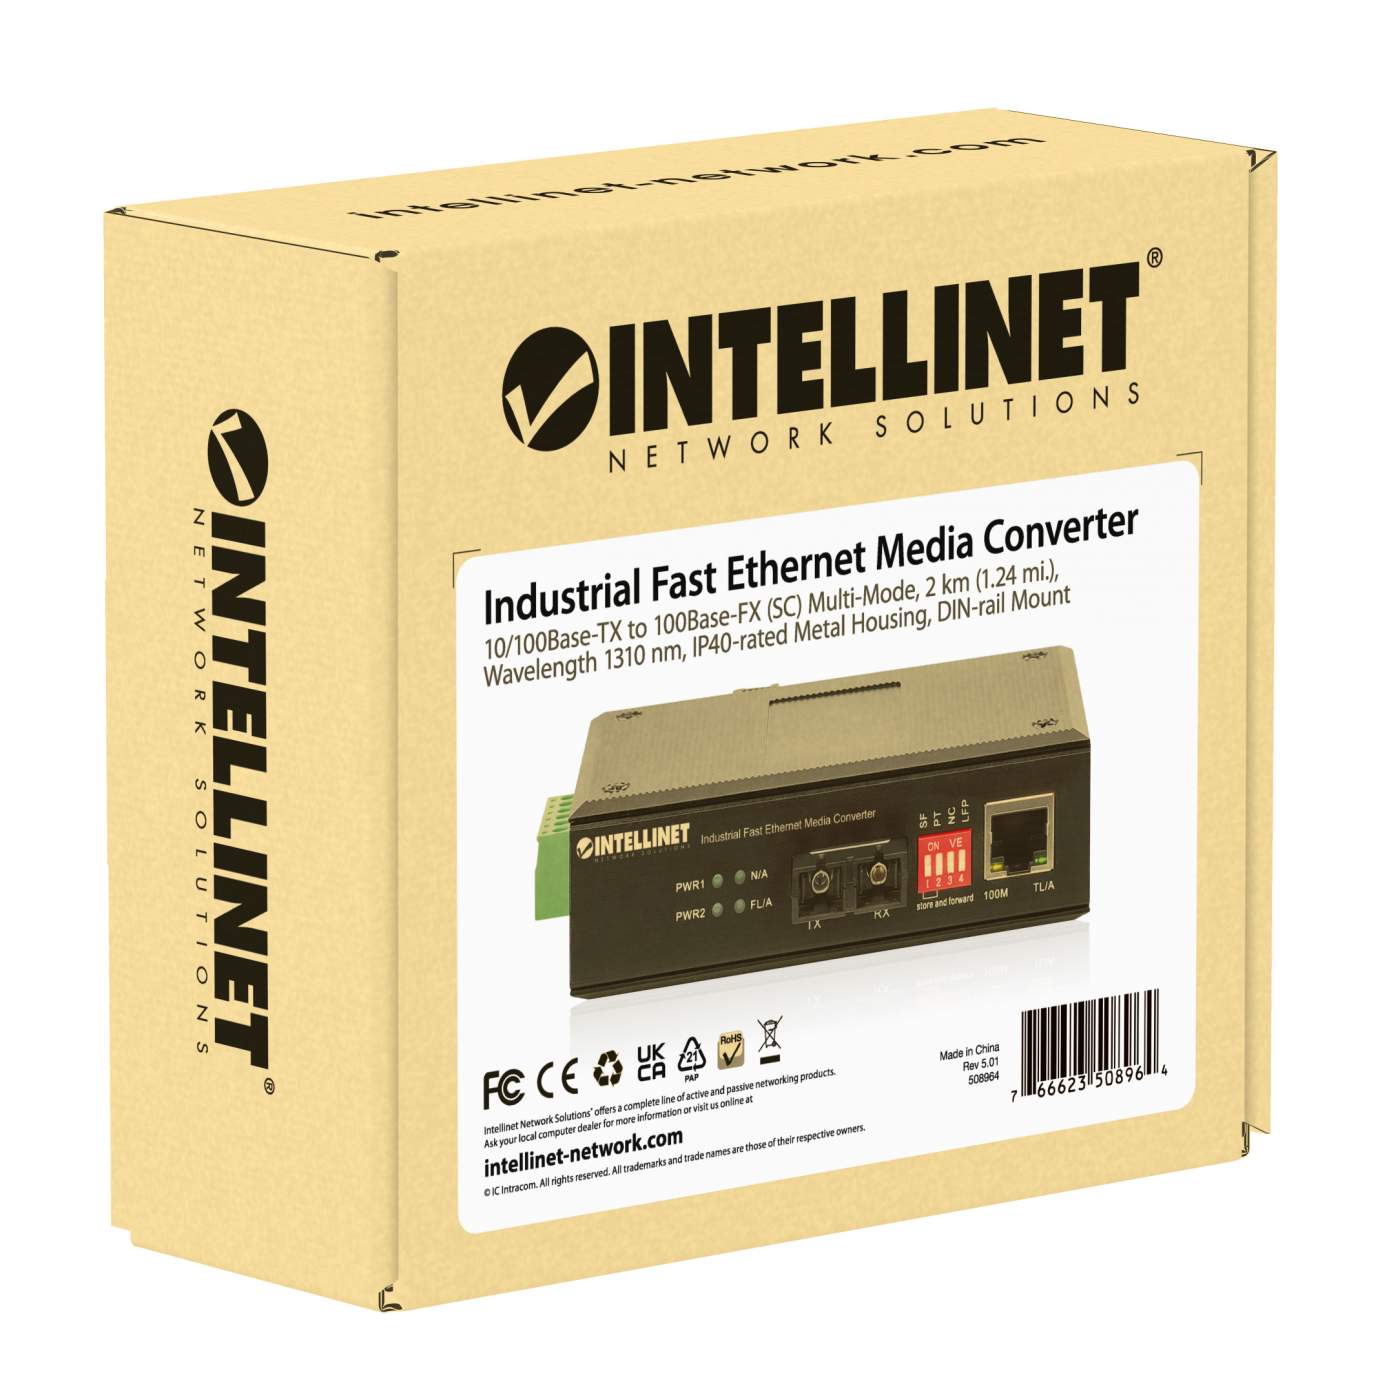 Industrial Fast Ethernet Media Converter Packaging Image 2